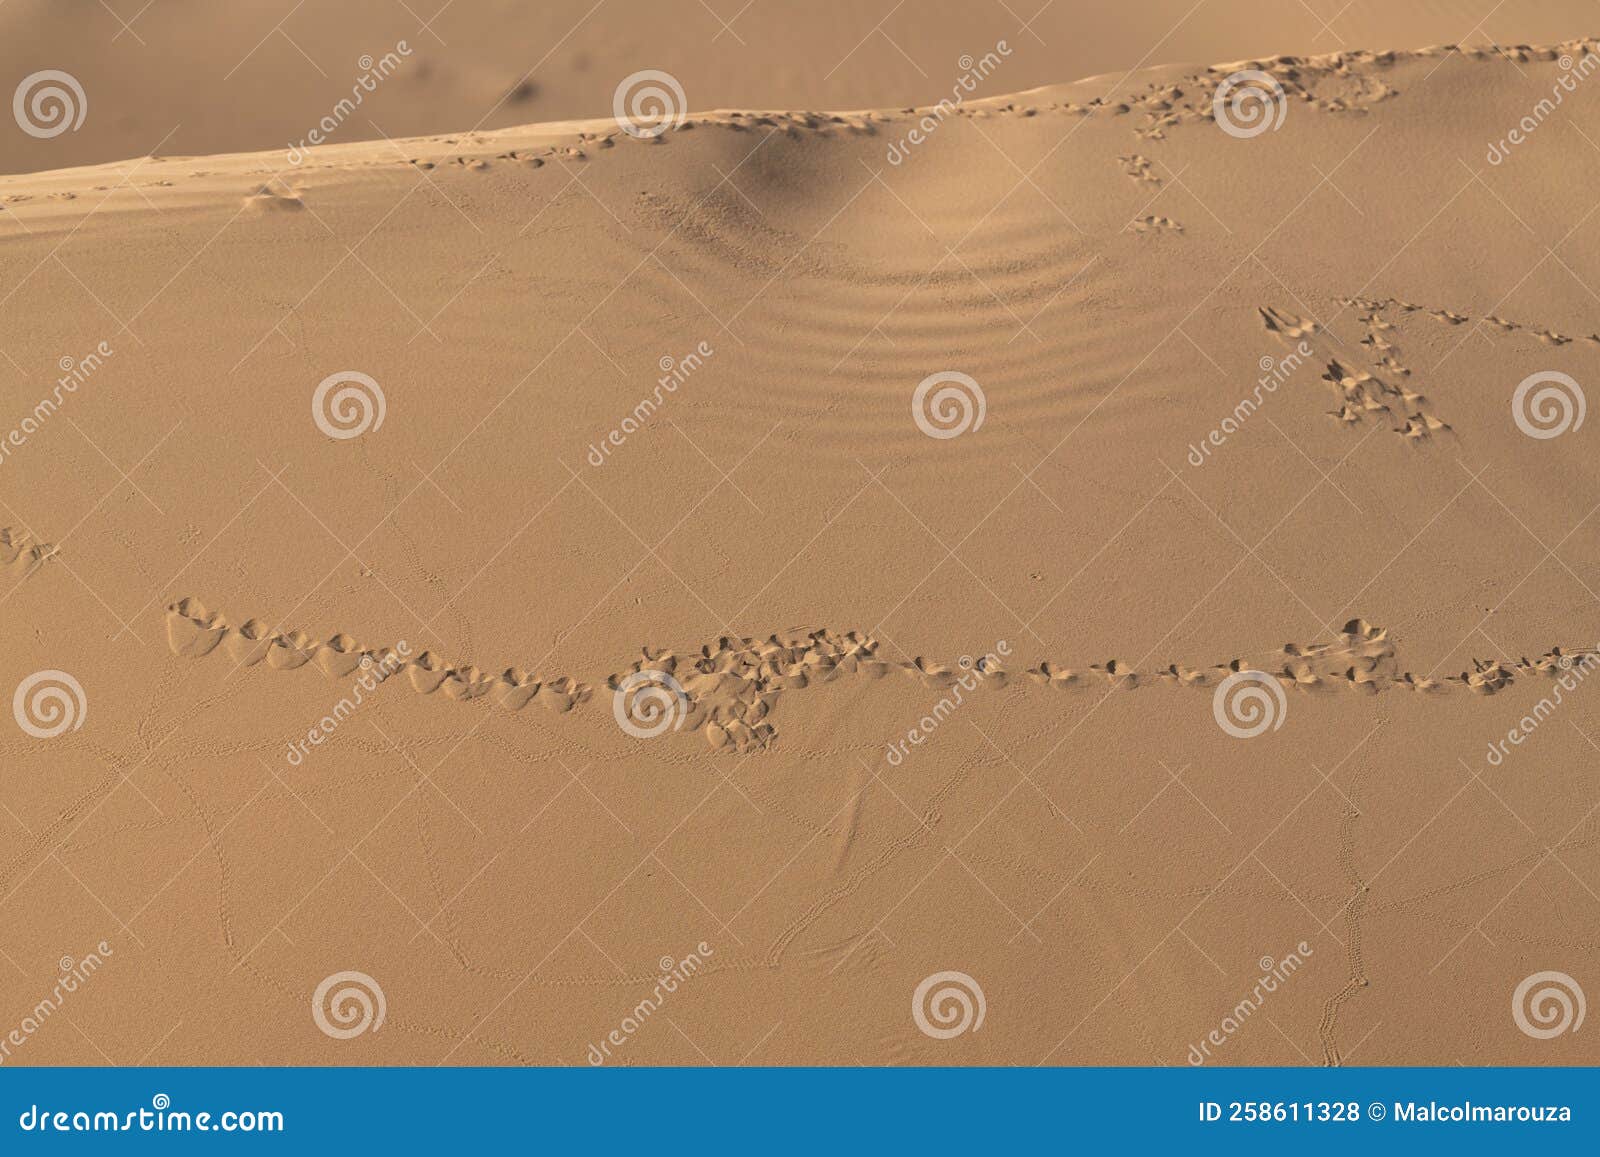 animal footprints on the dunes